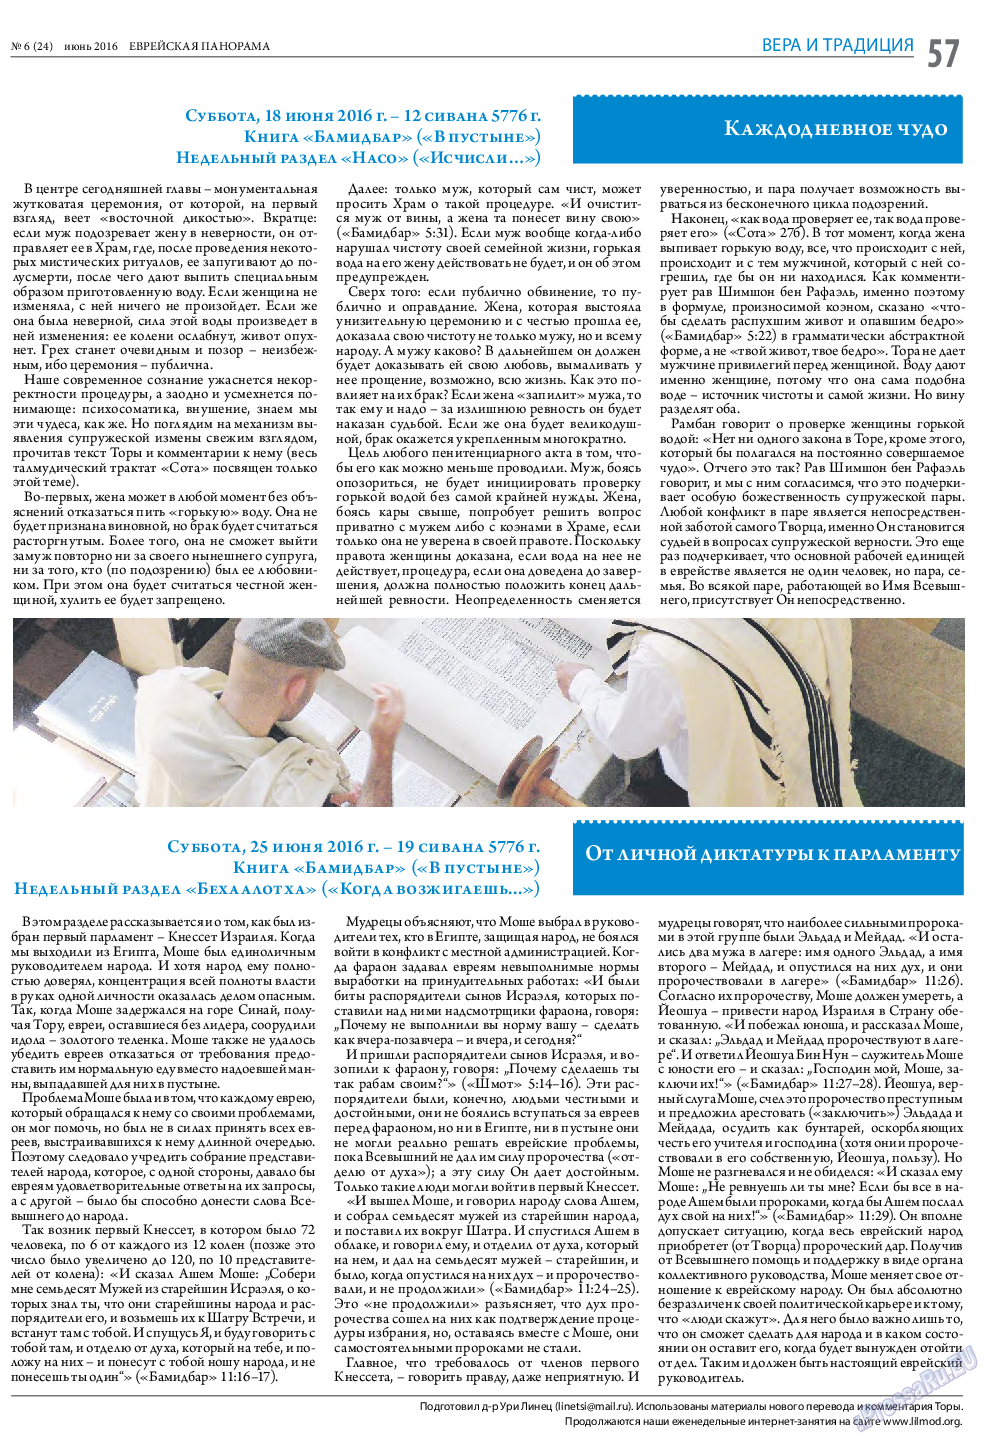 Еврейская панорама, газета. 2016 №6 стр.57